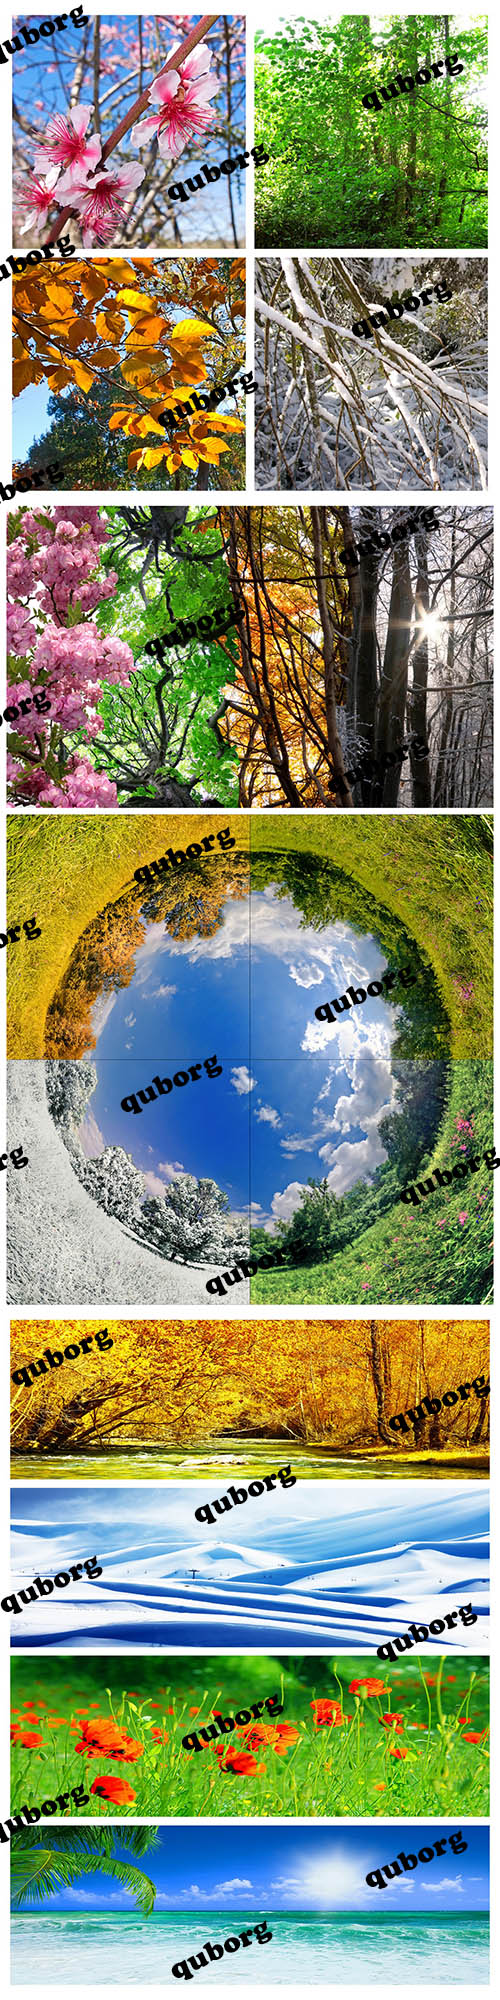 Stock Photos - Four Seasons